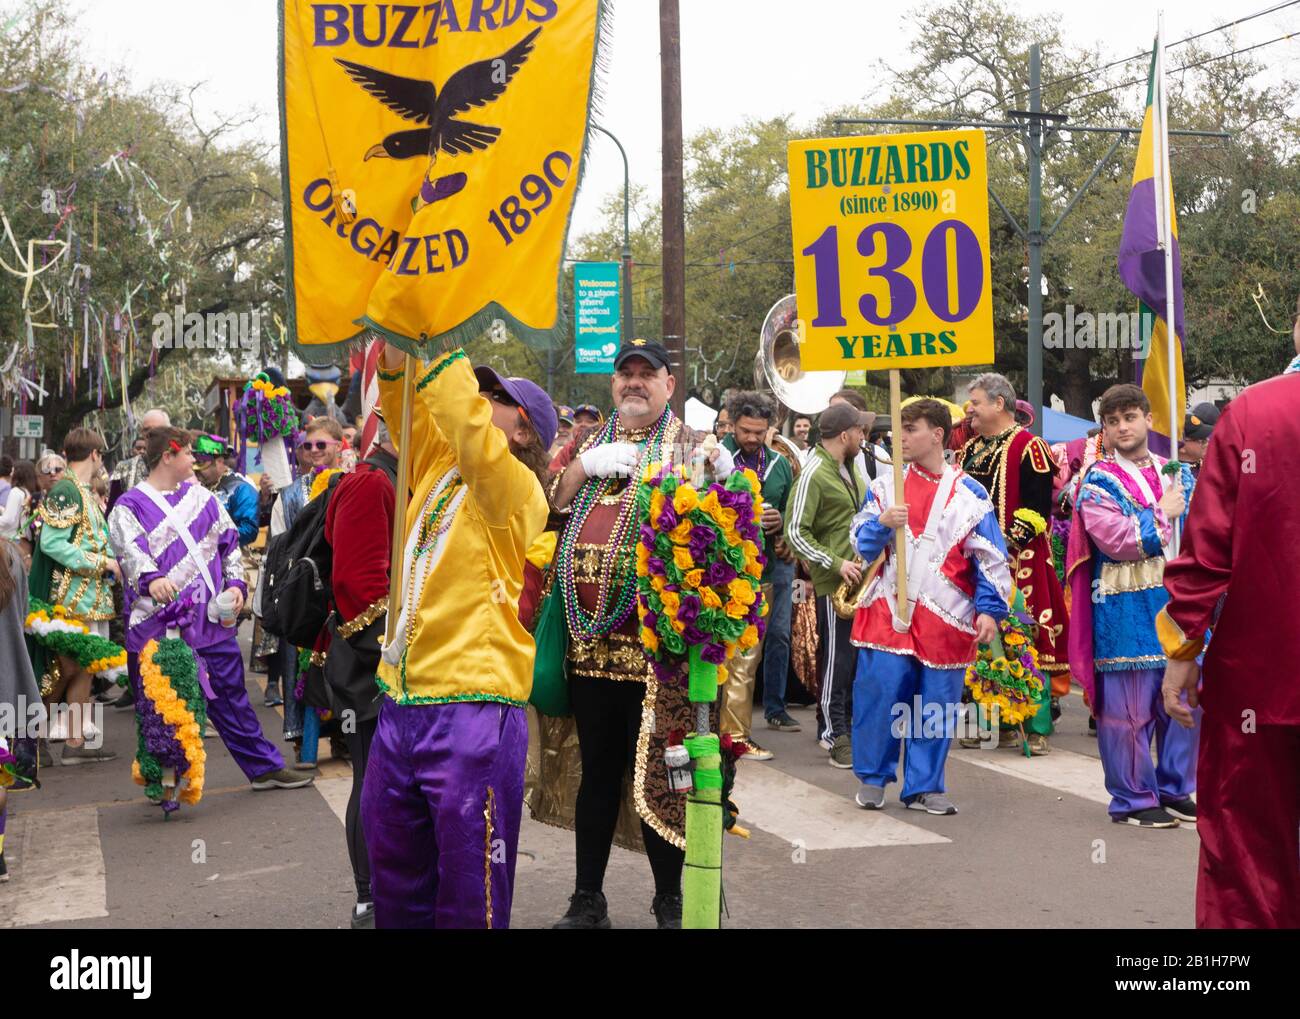 1890 Buzzards walking krewe on Mardi Gras morning, New Orleans, LA. Stock Photo